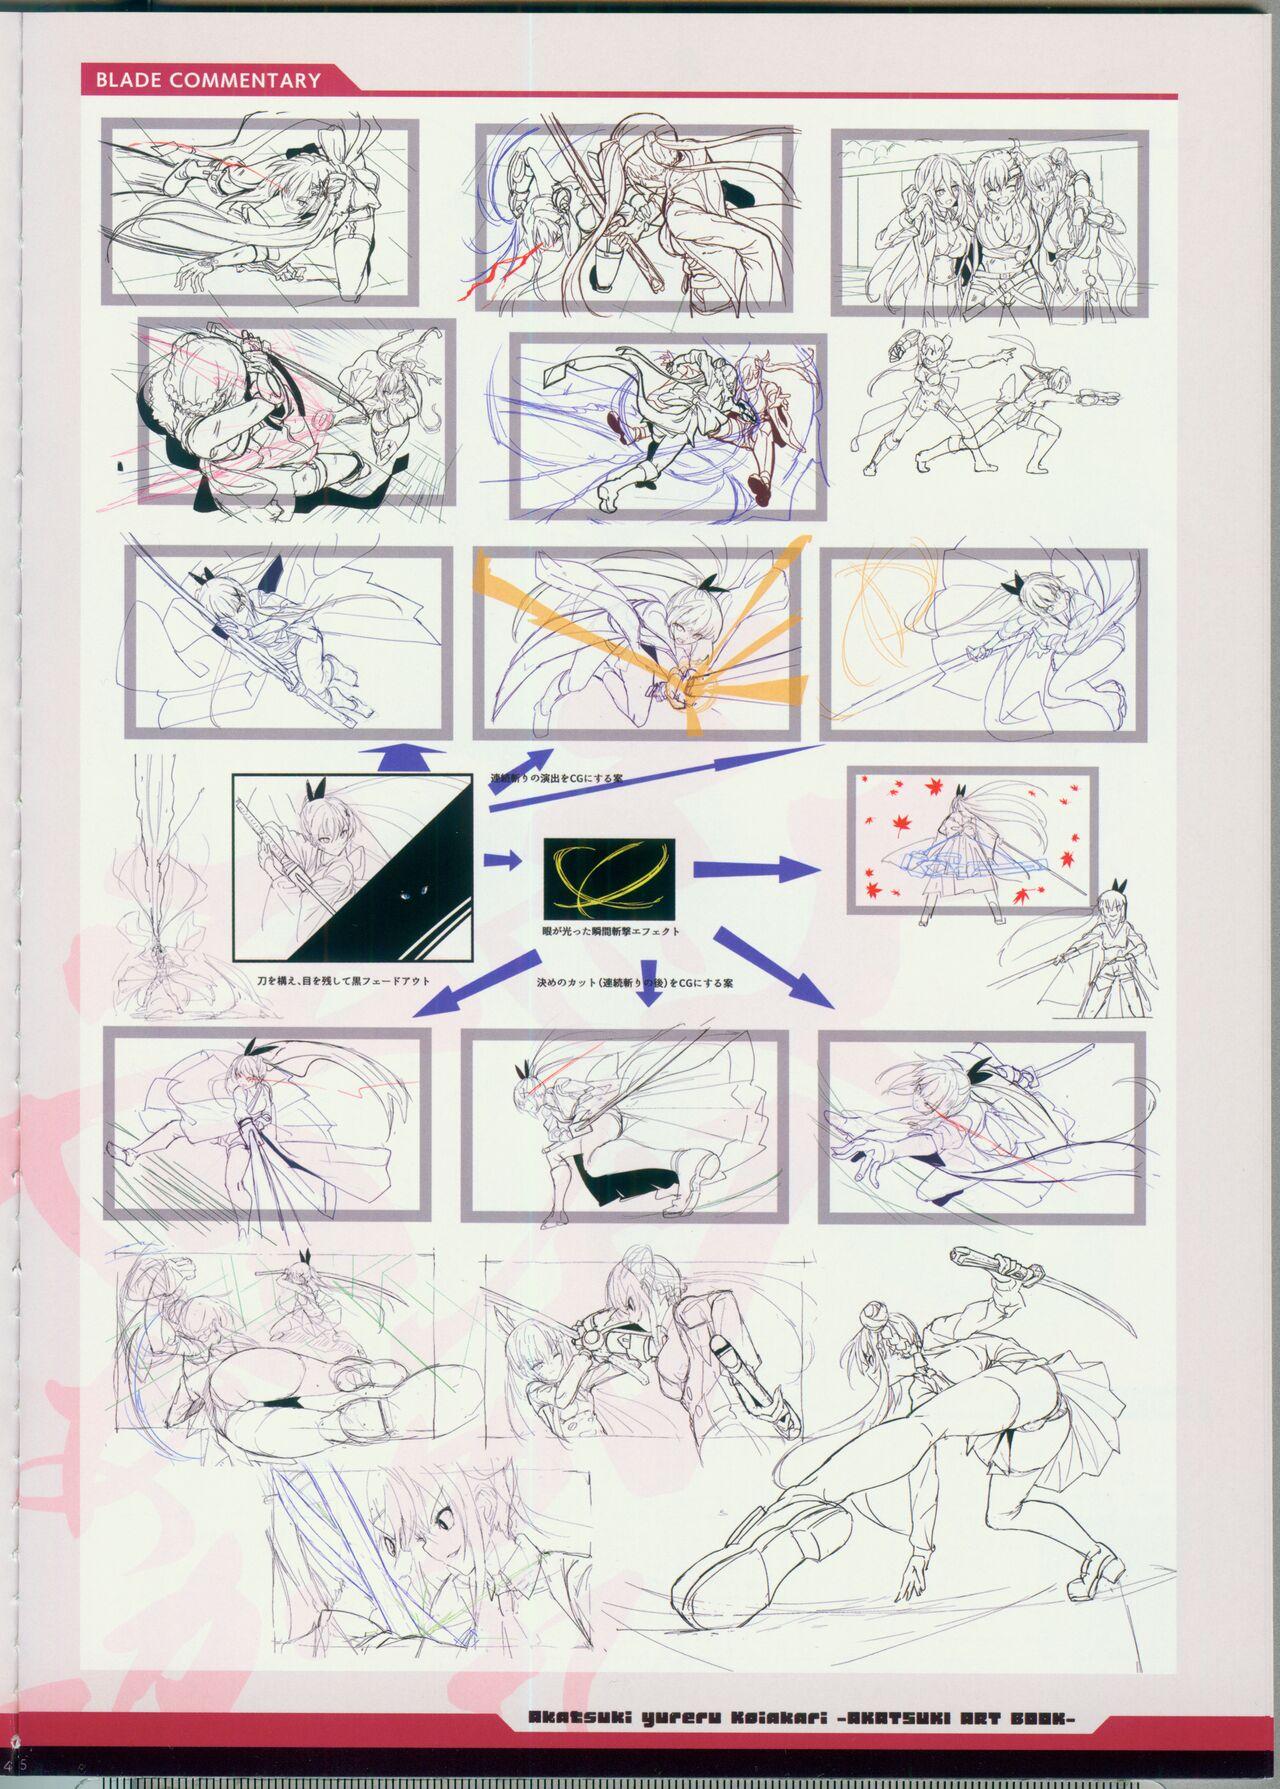 CRYSTALIA 4thPROJECT Akatsuki Yureru Koi Akari AKATSUKI ART BOOK 13